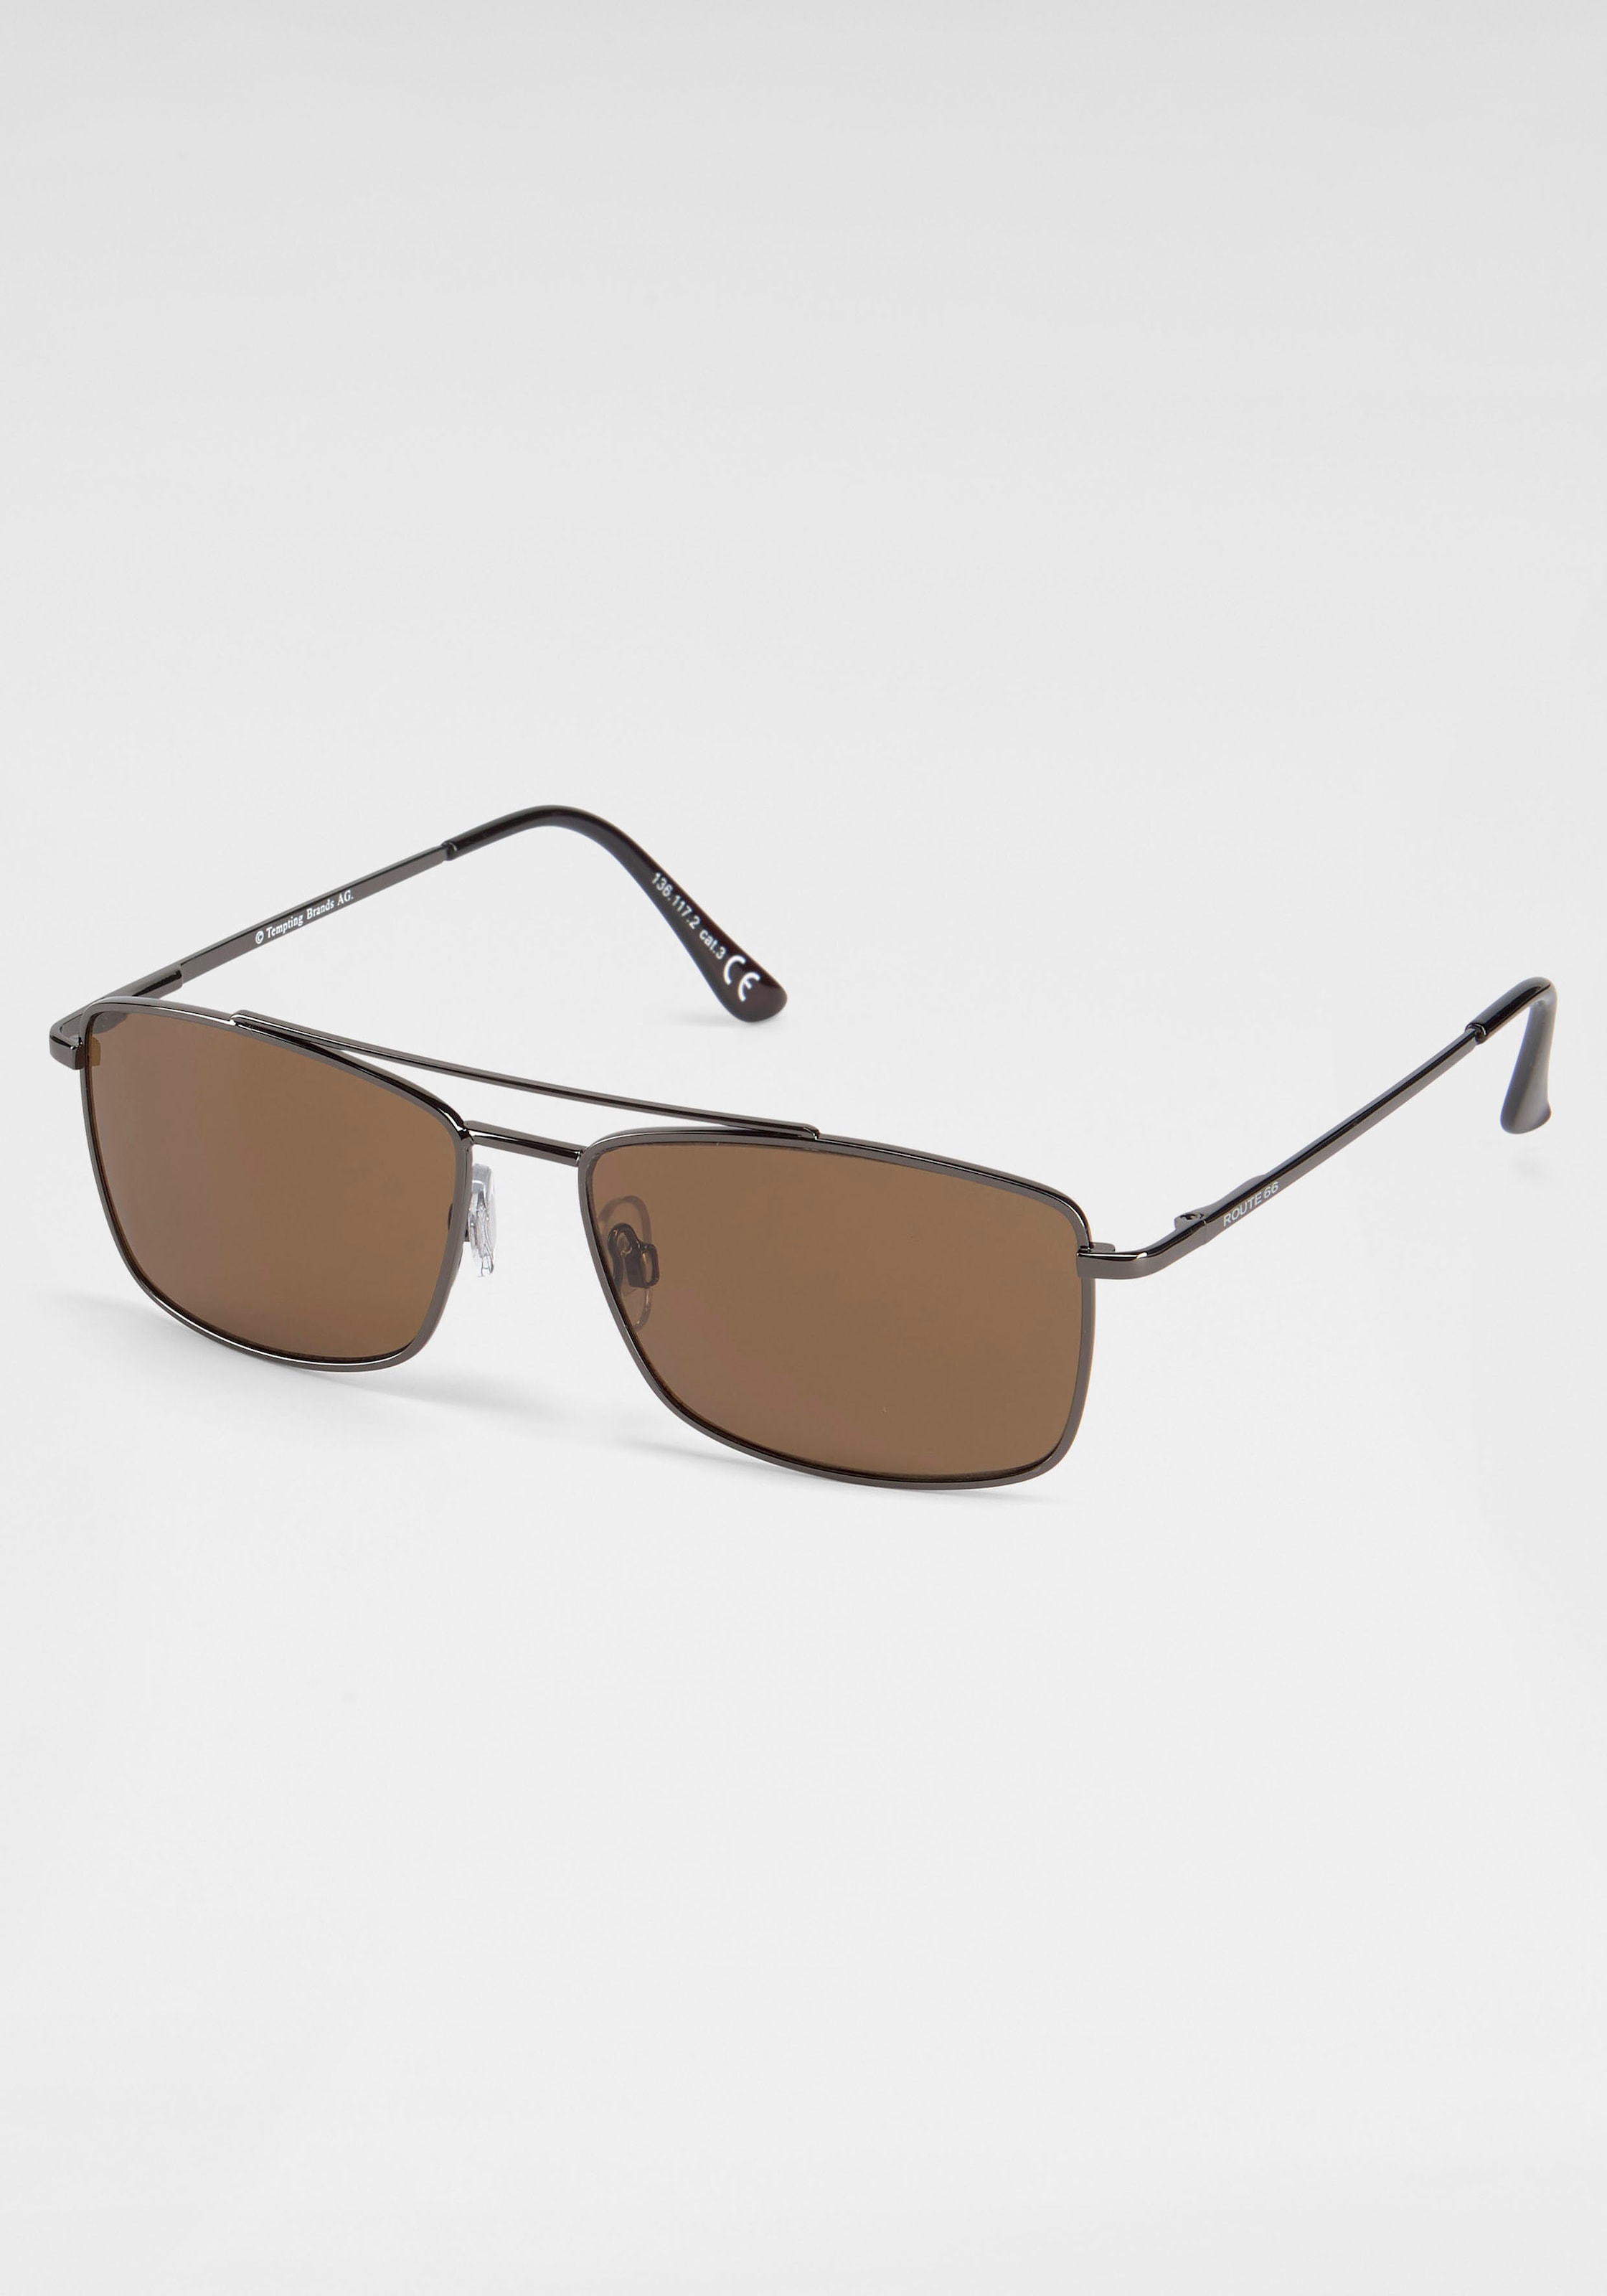 the Feel kaufen 66 online Sonnenbrille Eyewear ROUTE Freedom